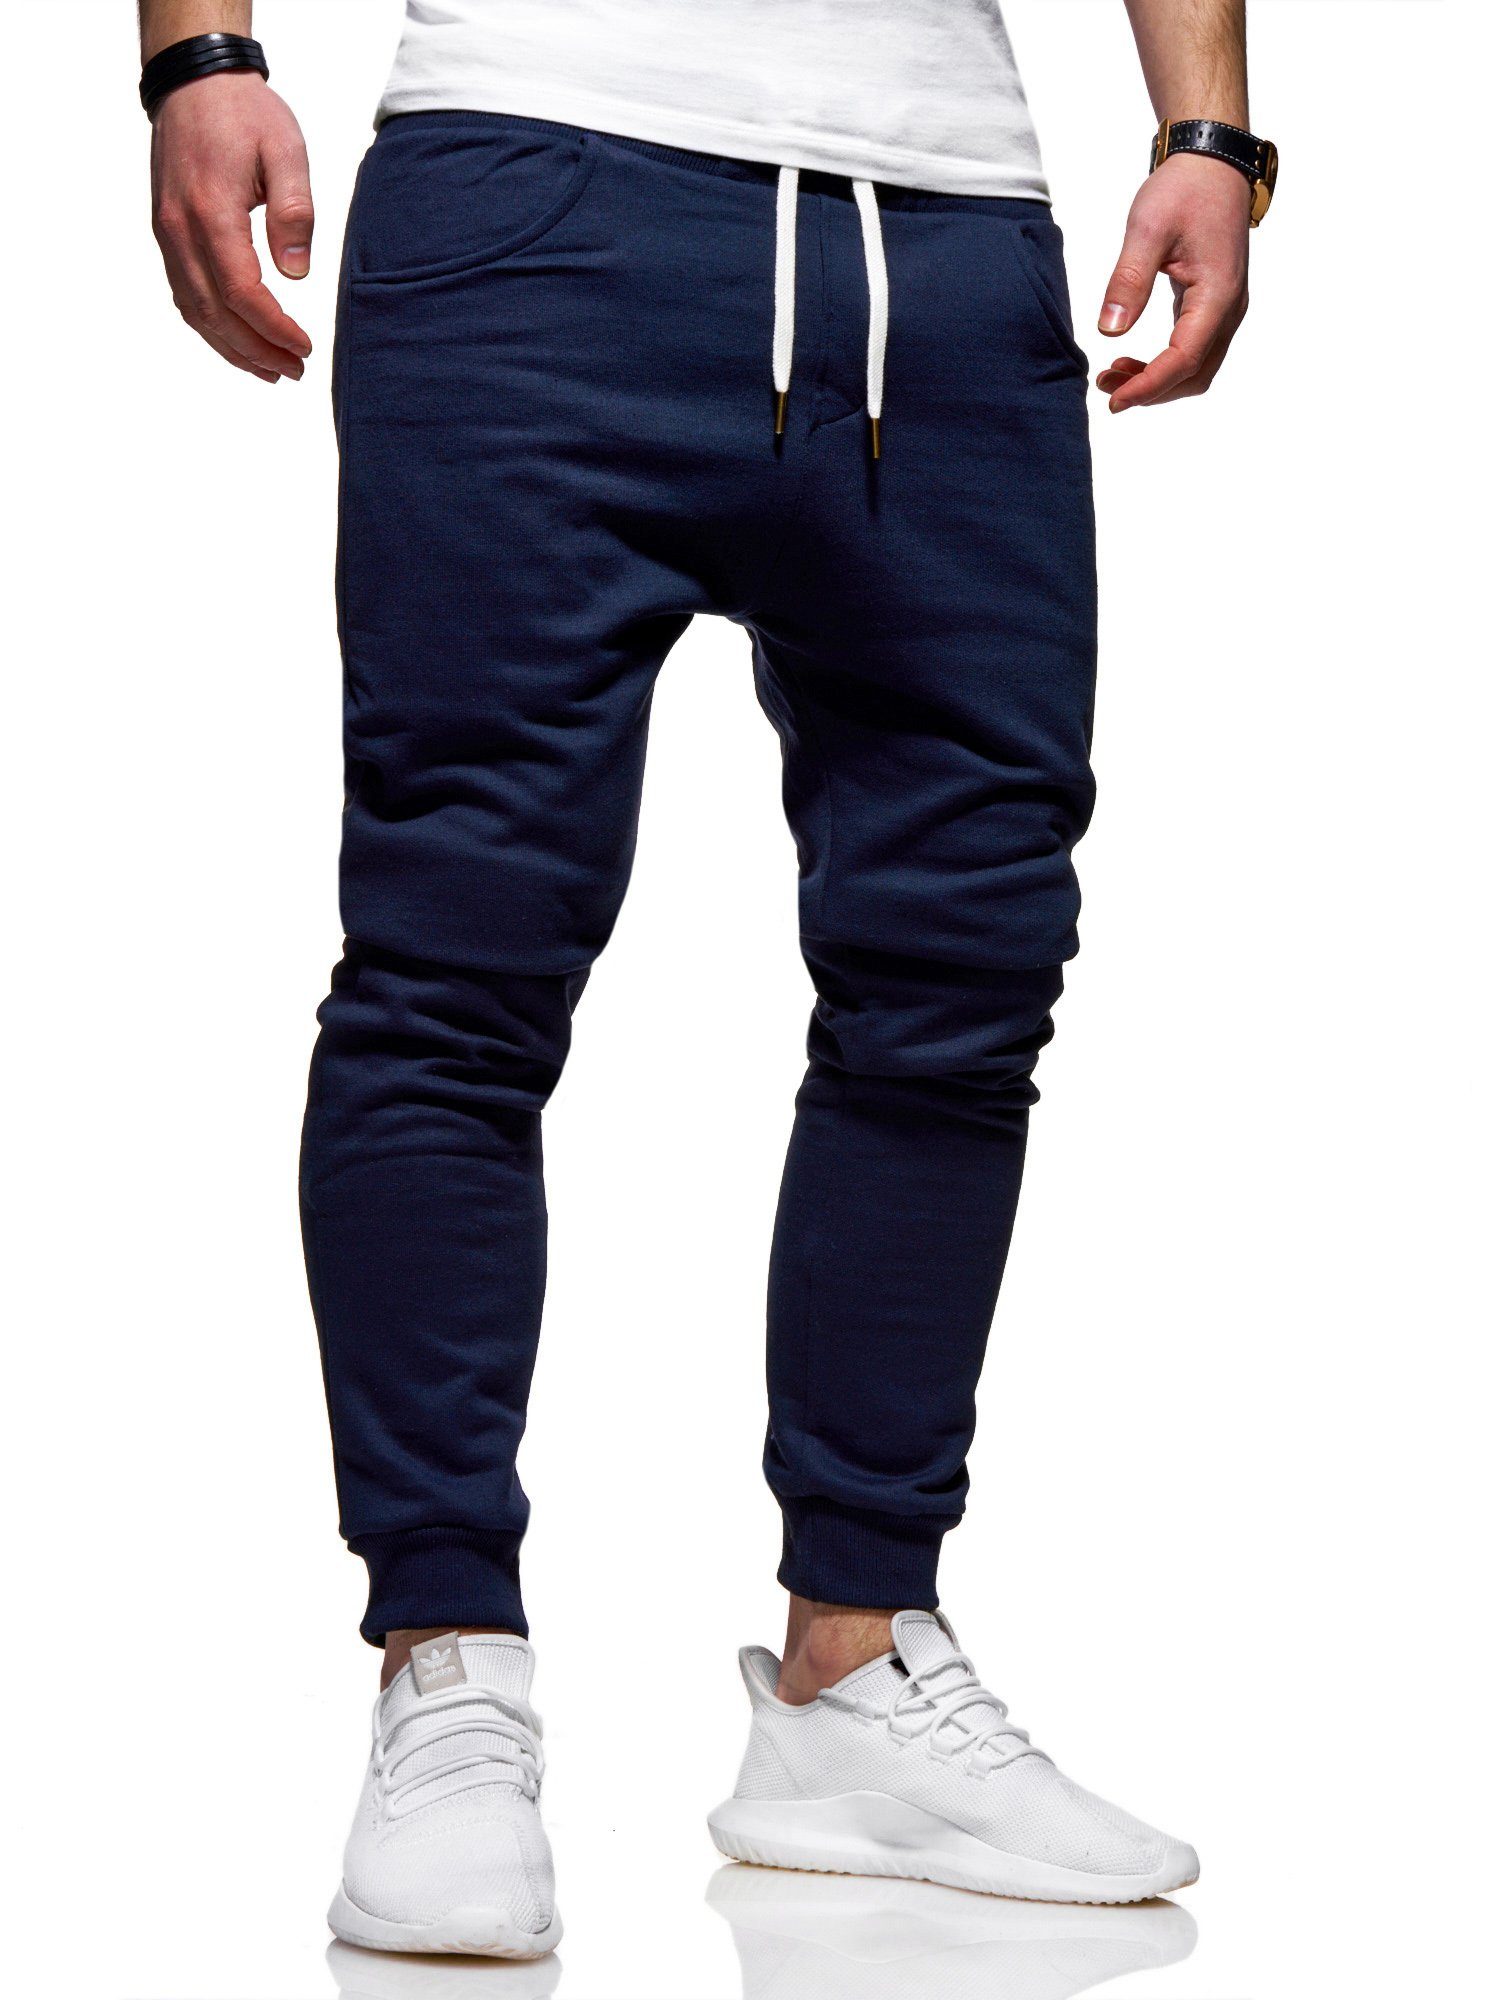 Jogginghosen in blau online kaufen » Blaue Sweatpants | OTTO